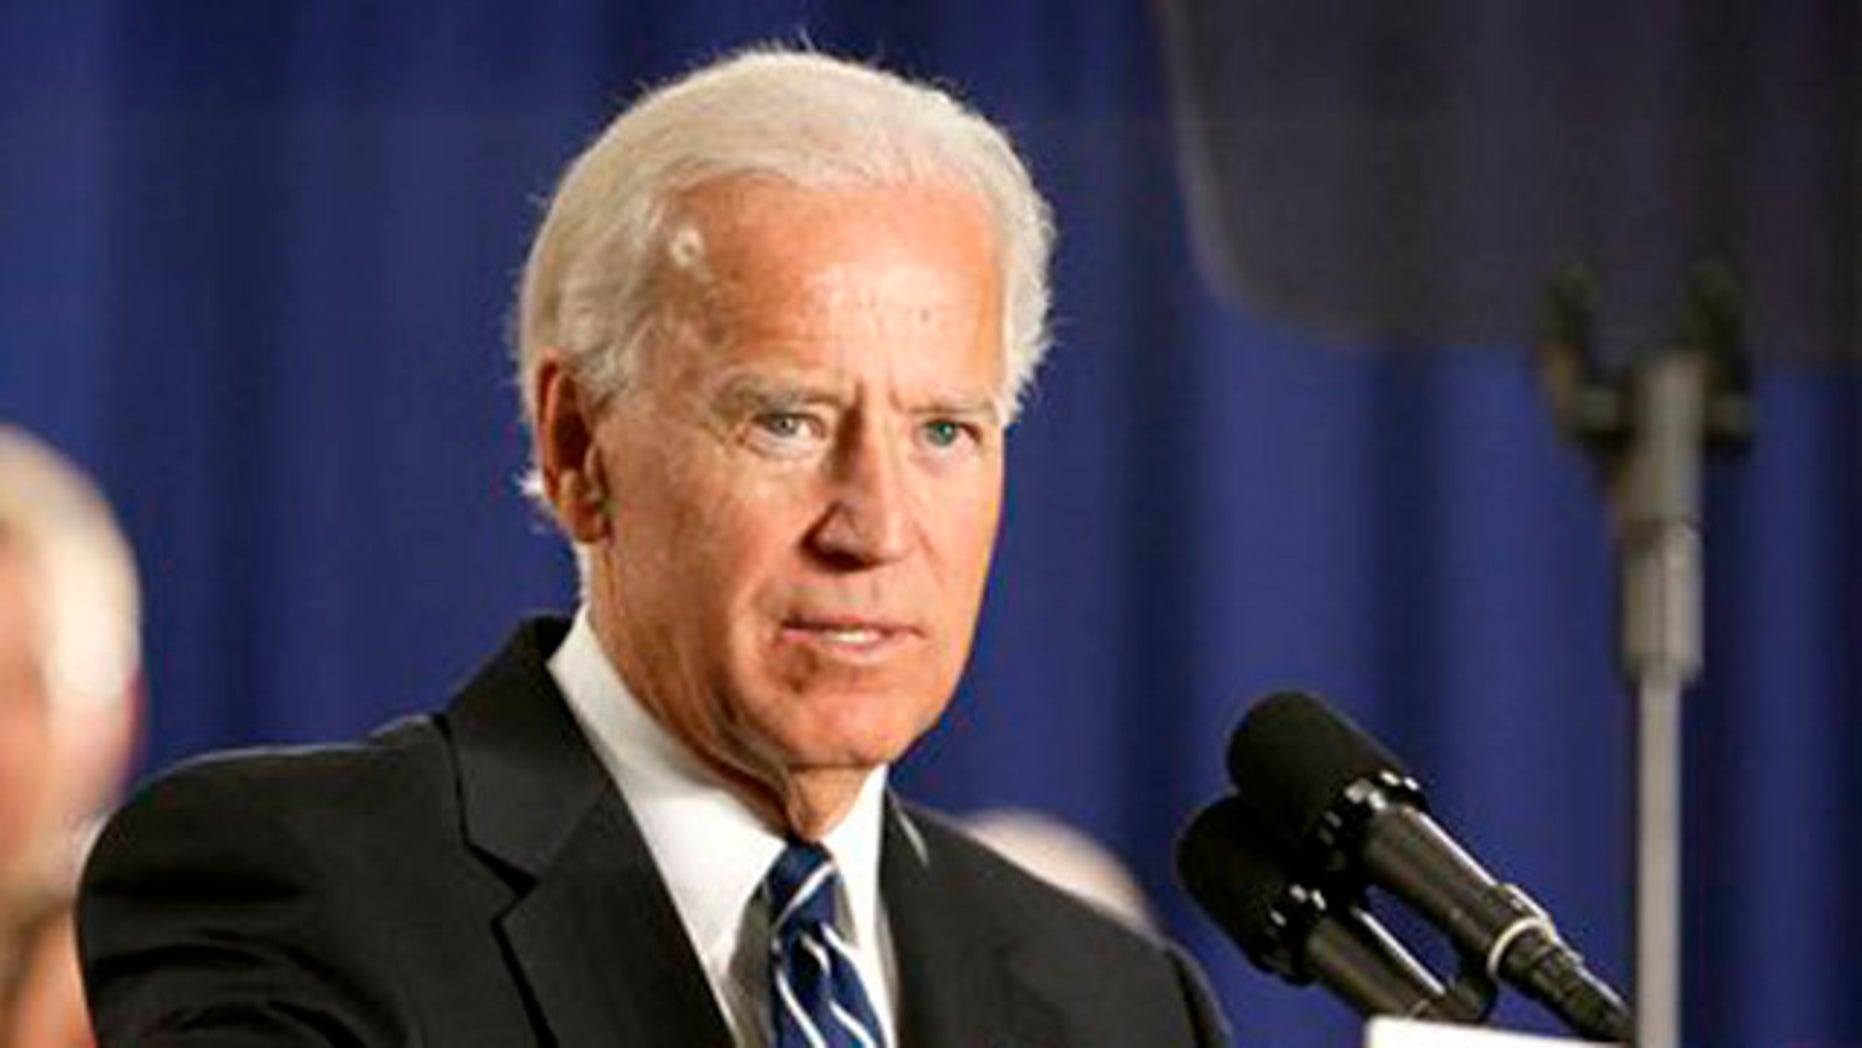 Biden assumes role of Romney attacker